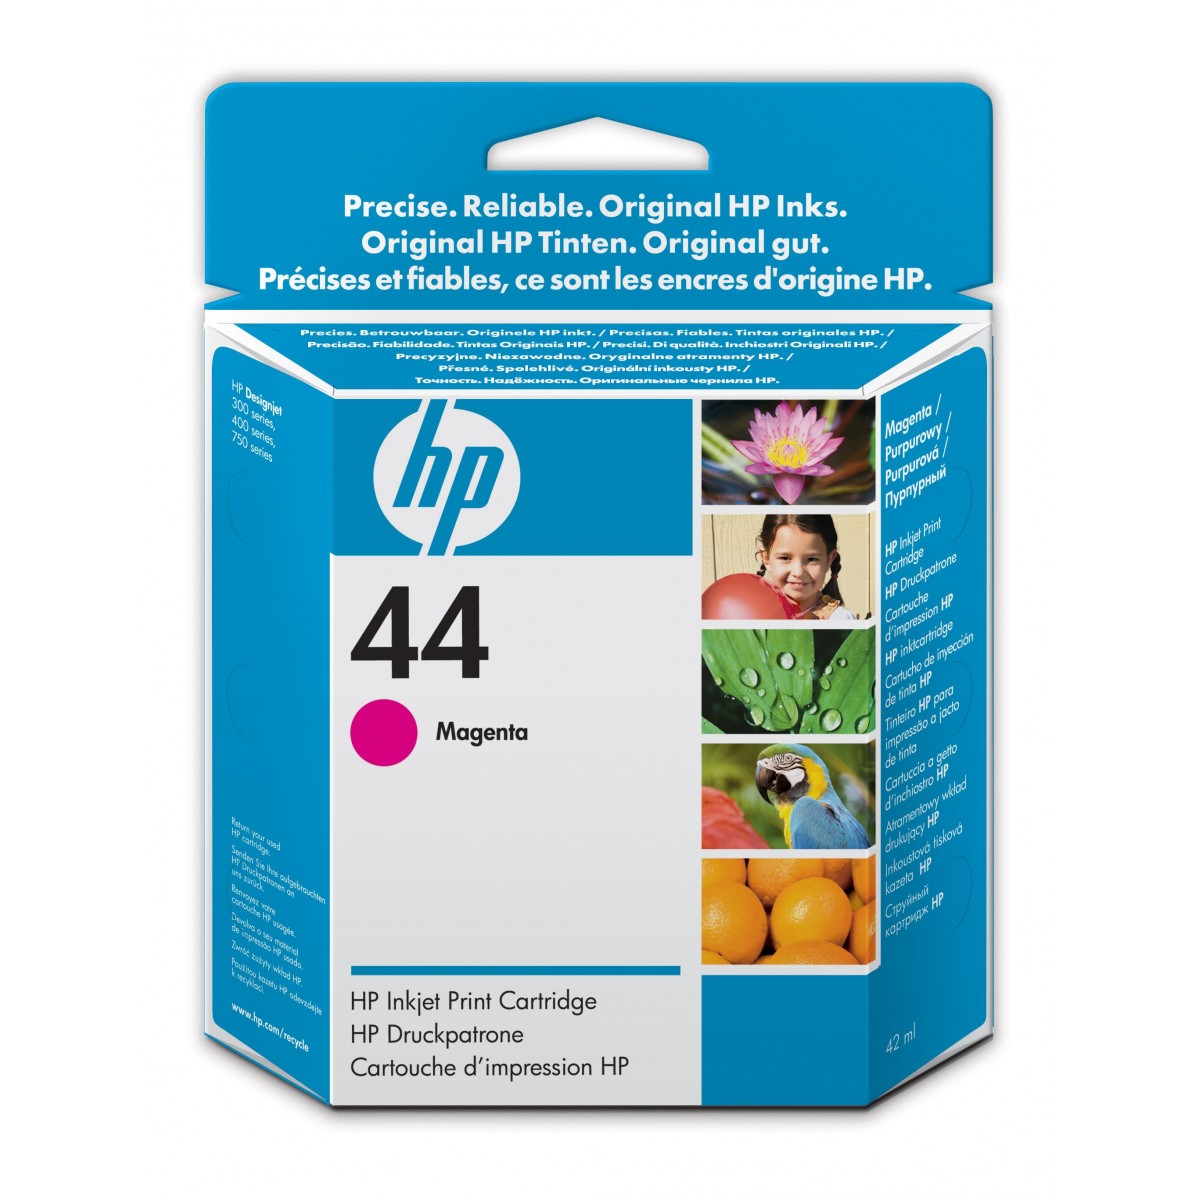 HP 44 - Original - Pigment-based ink - Magenta - HP - HP Designjet 350 - 450 - 455 - 488 - 750,755 - Inkjet printing